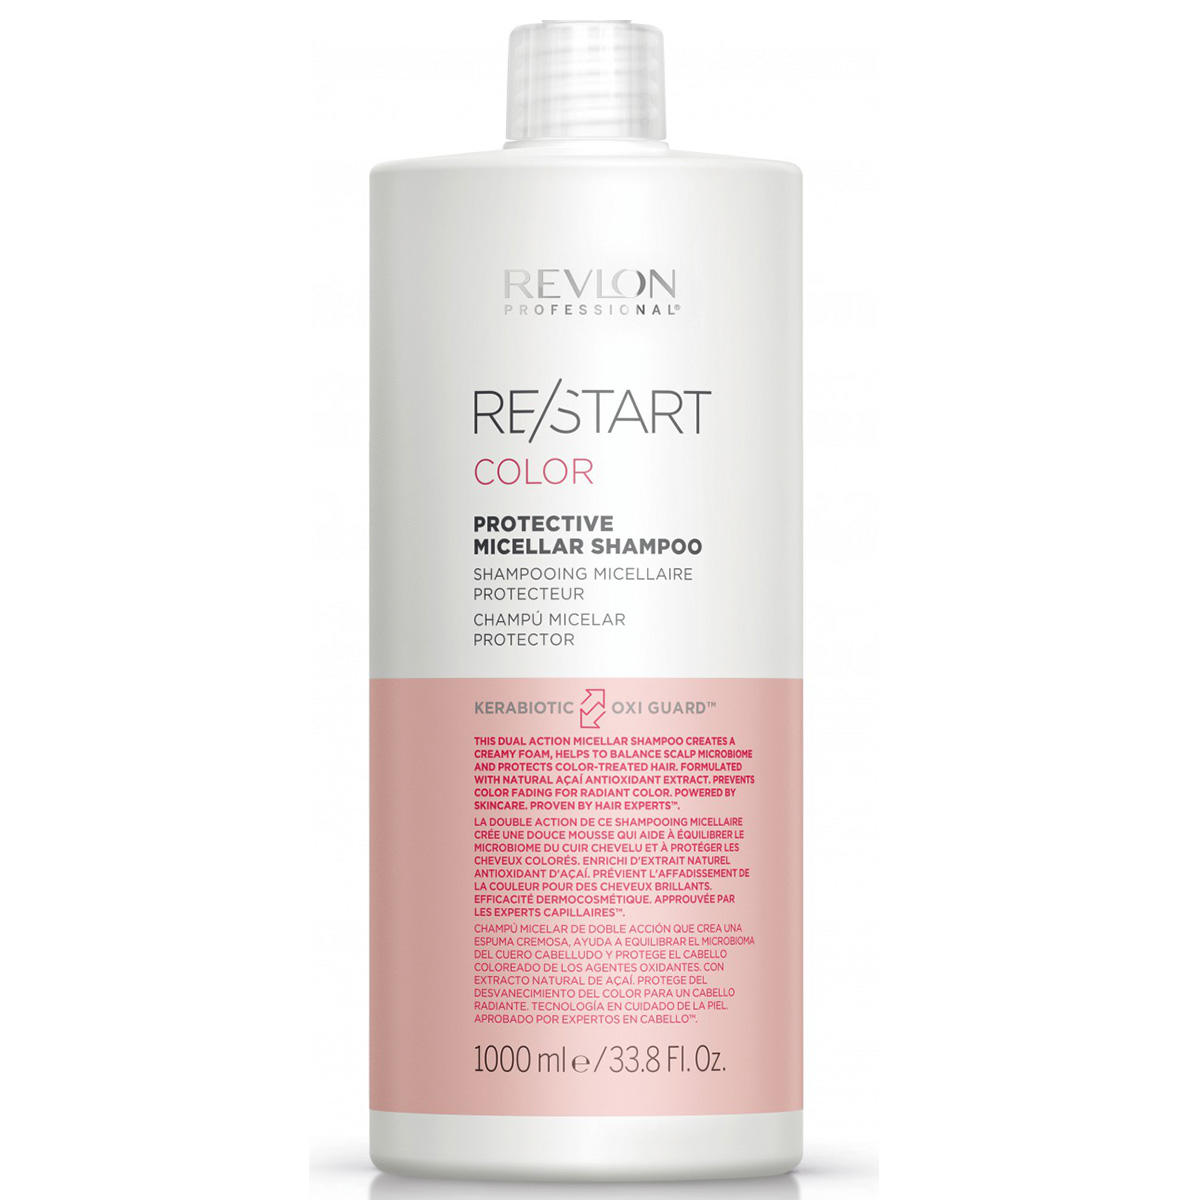 Shampoo Micellar | baslerbeauty Liter 1 Revlon Color Professional Protective RE/START